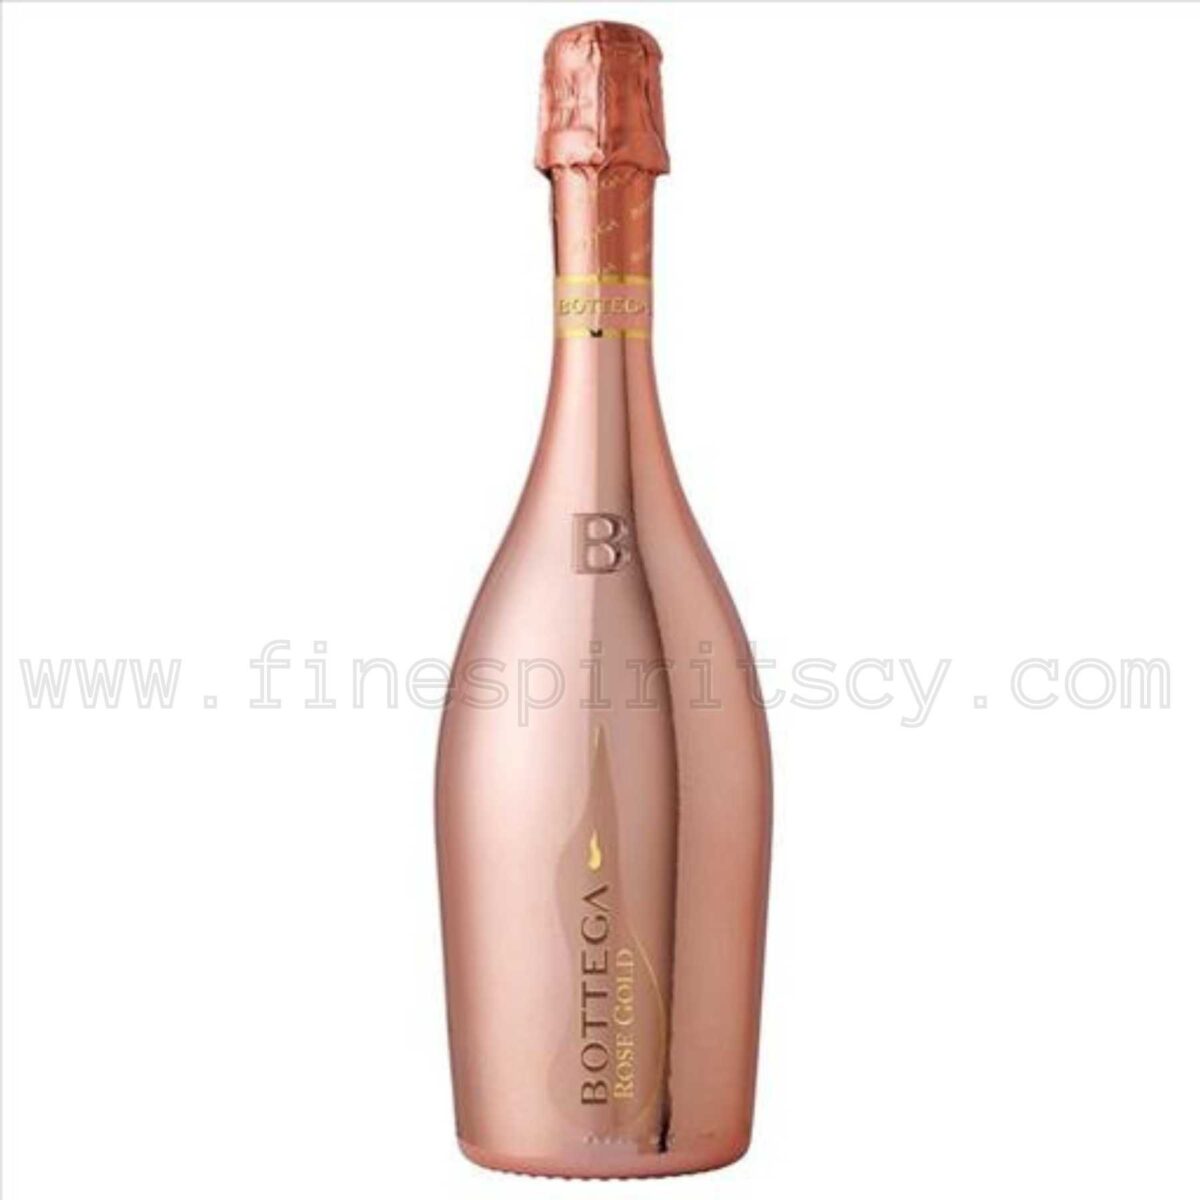 Bottega Rose Gold Cyprus Wine Sparkling Price Shop Order Online Buy FSCY